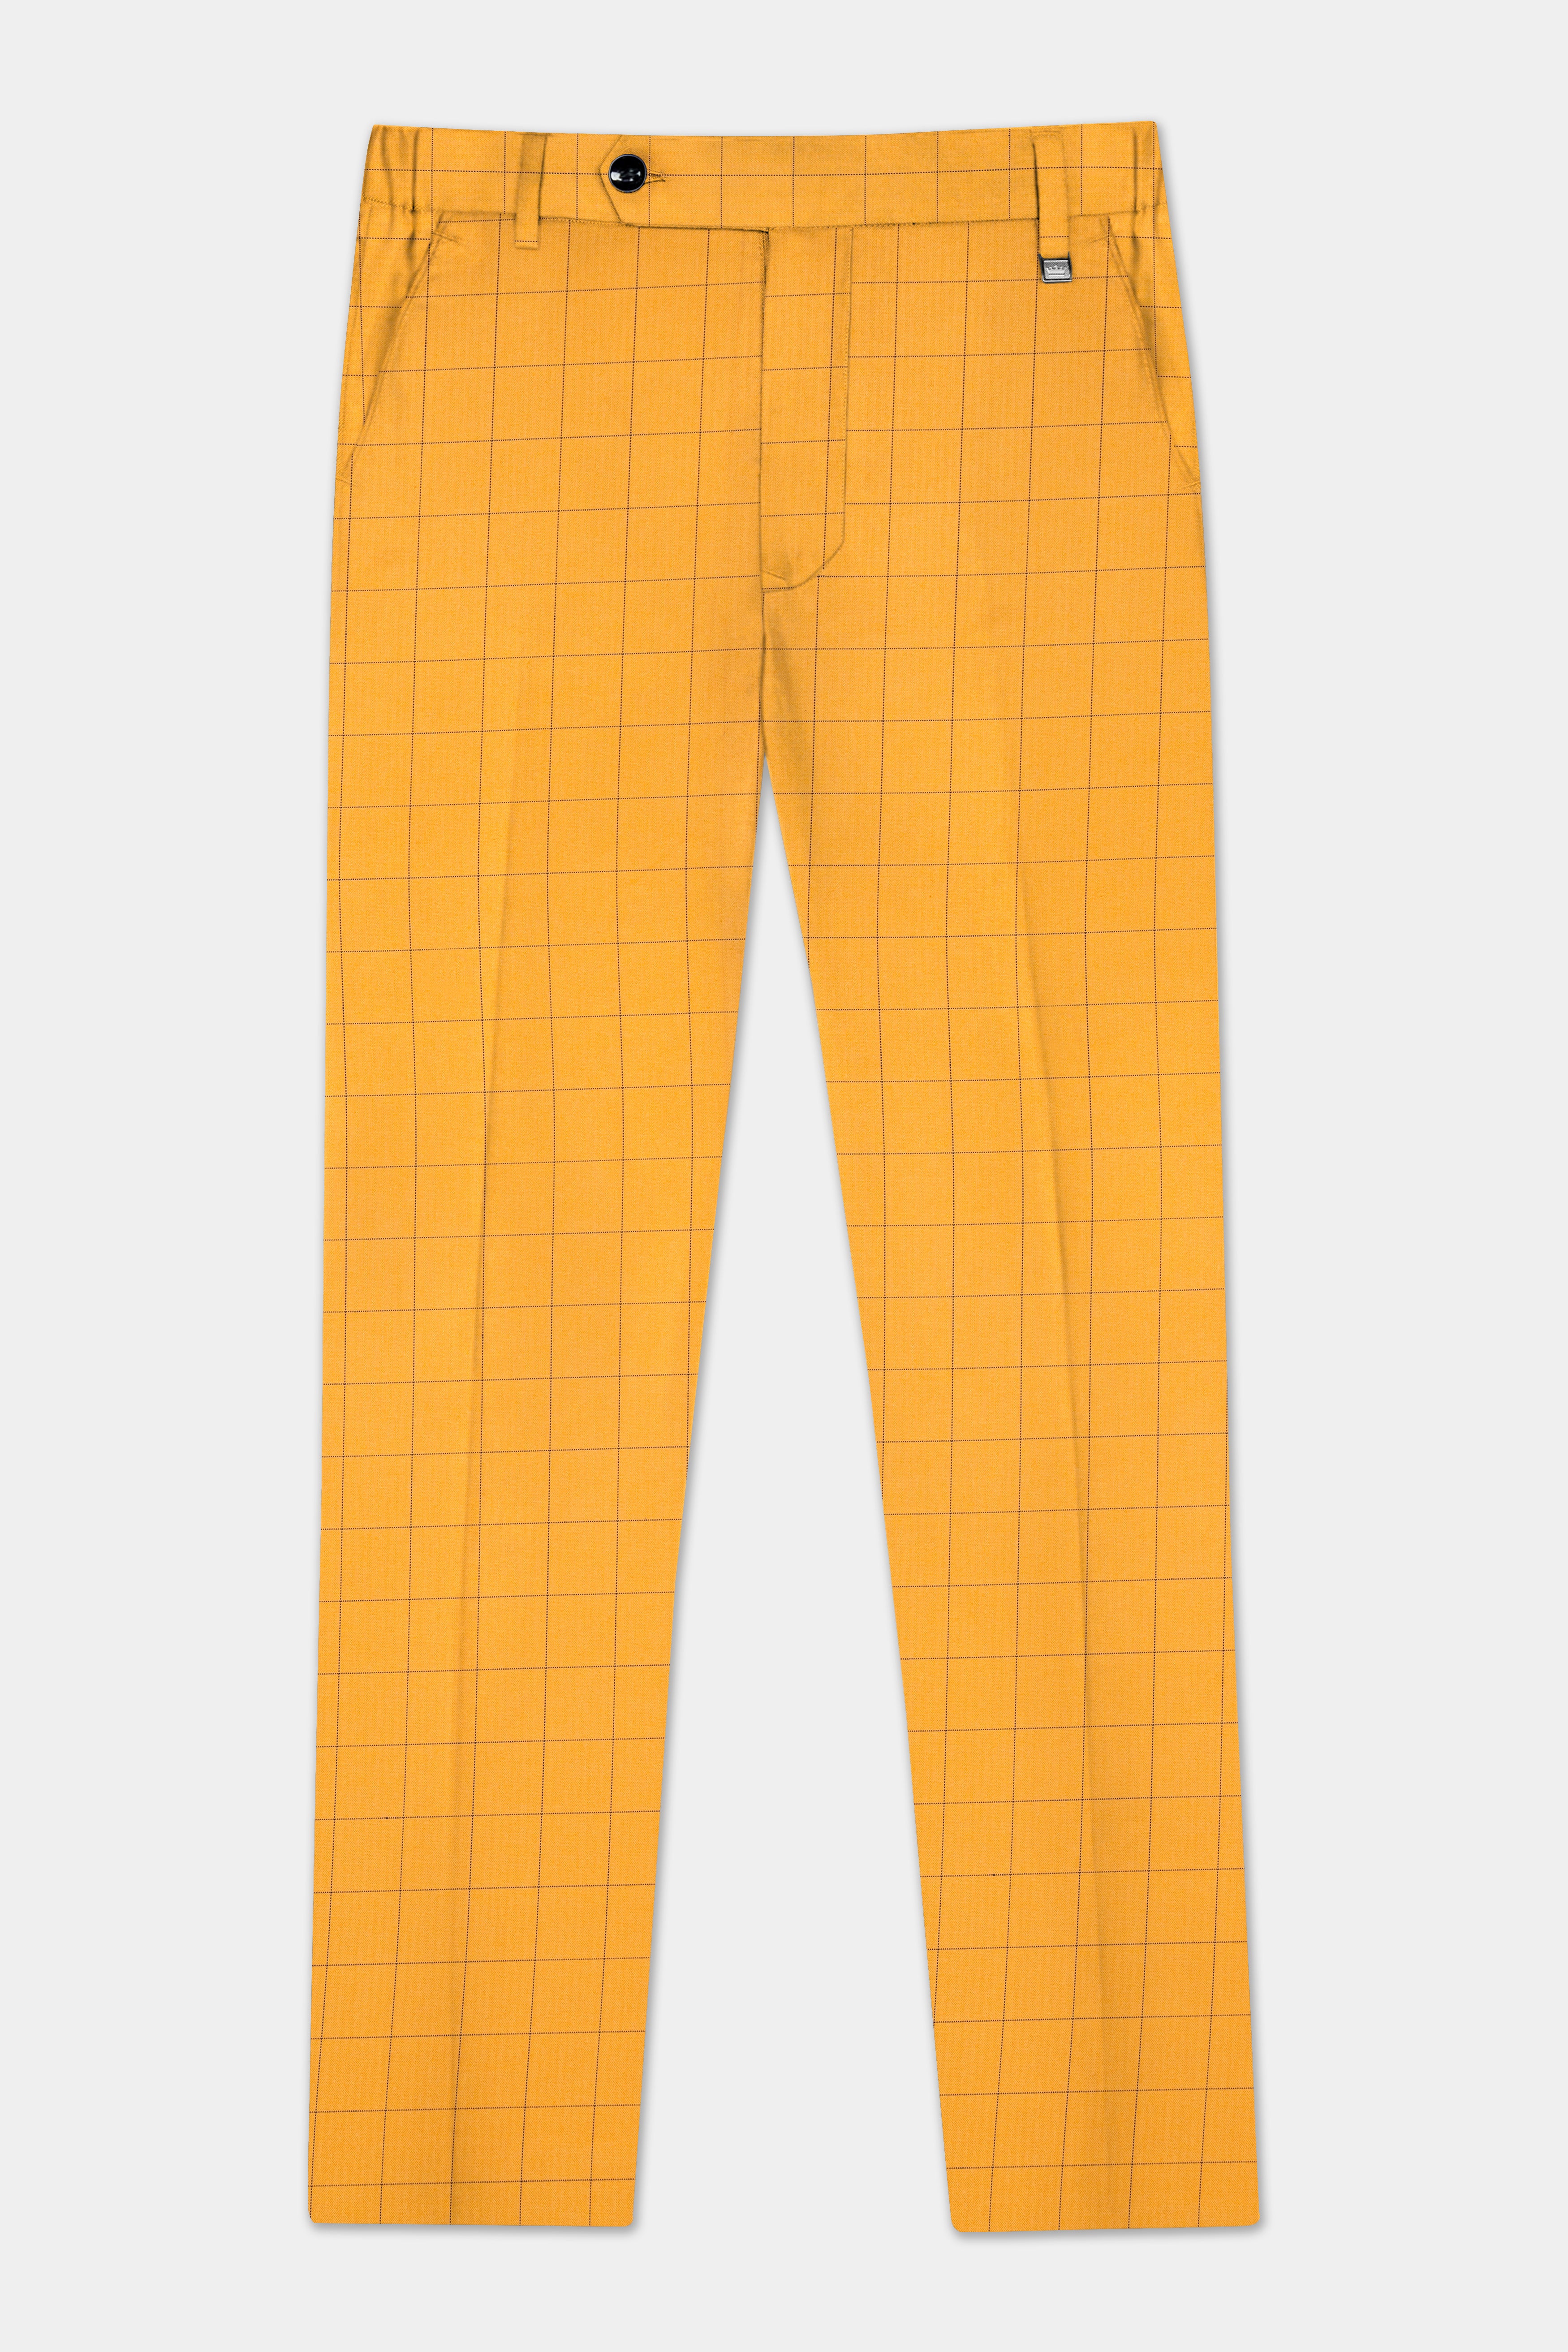 Cantaloupe Yellow herringbone Windowpane Tuxedo Suit